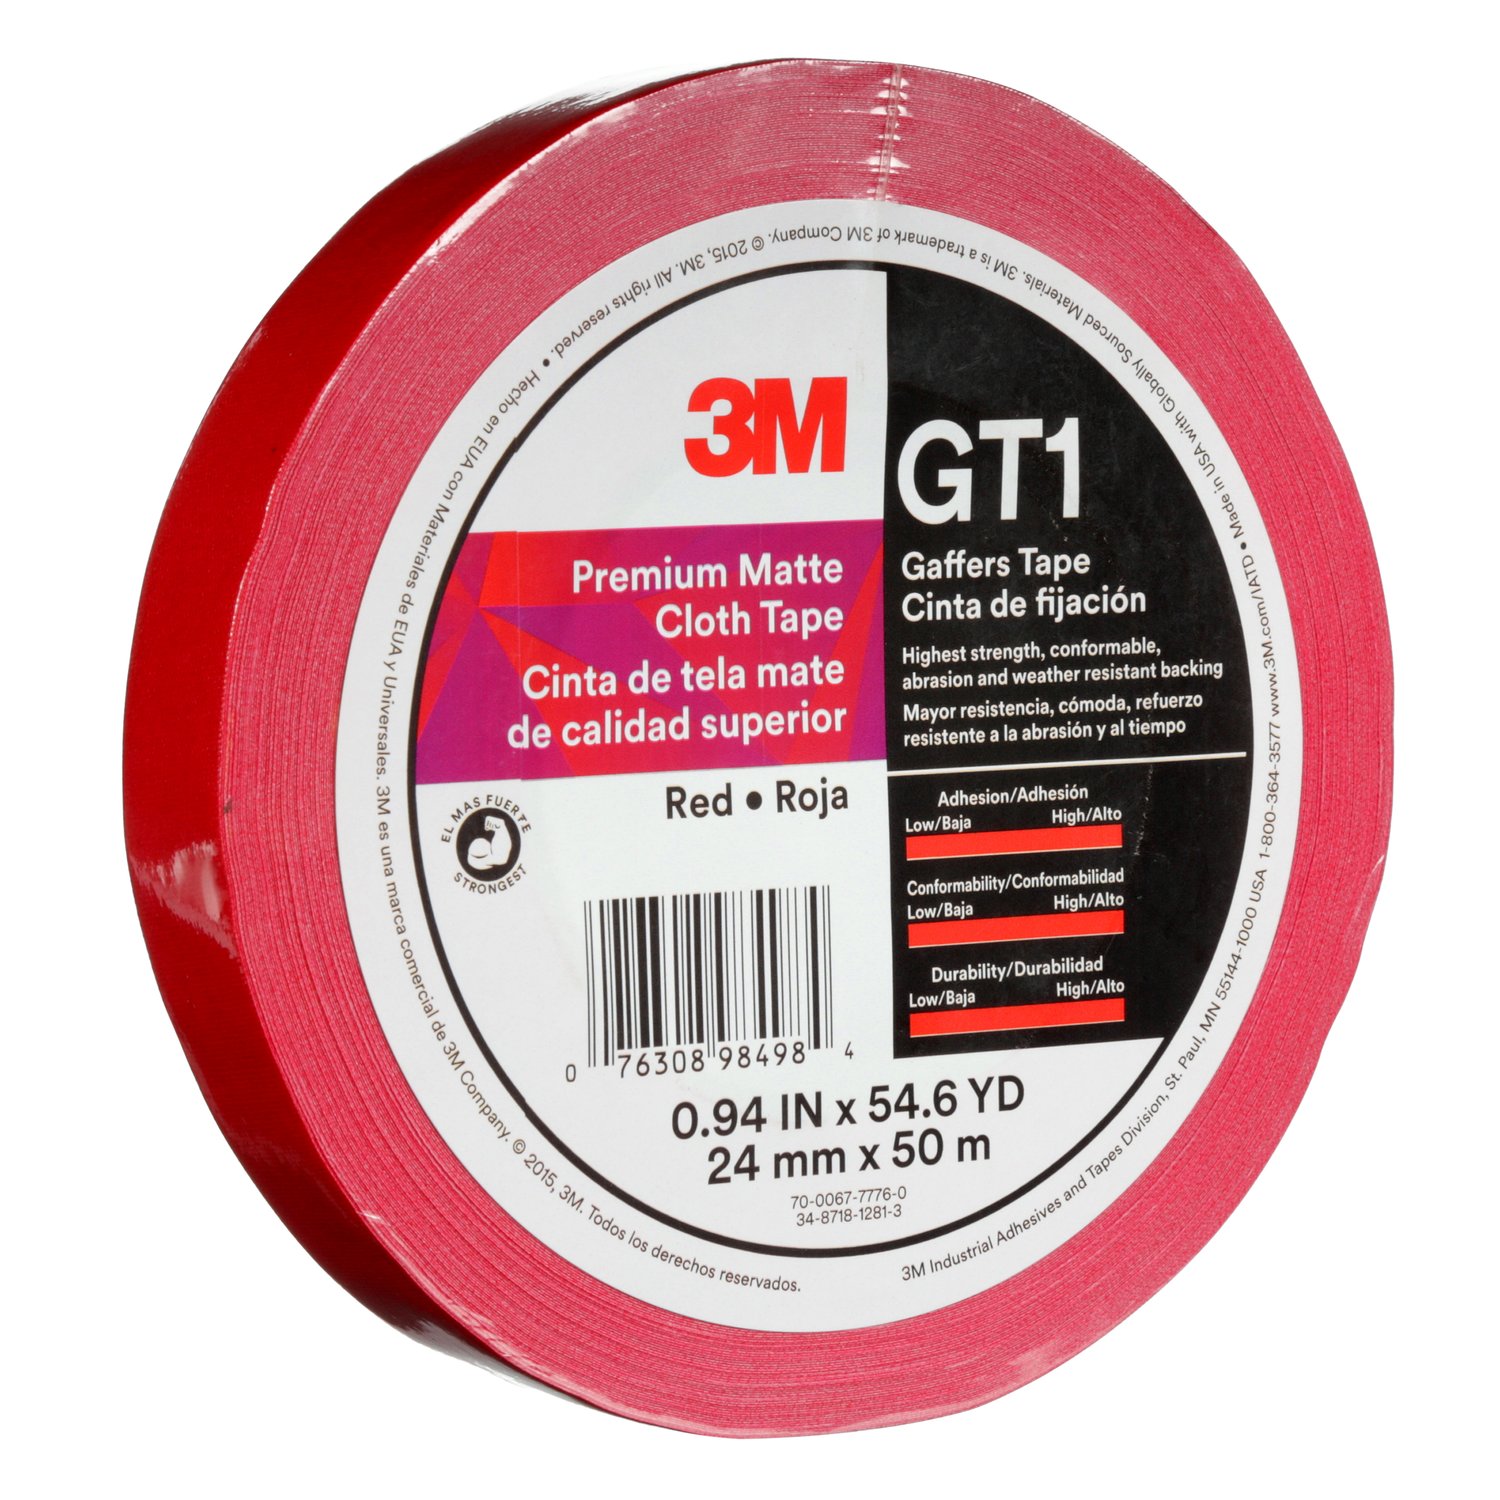 7010300507 - 3M Premium Matte Cloth (Gaffers) Tape GT1, Red, 24 mm x 50 m, 11 mil,
48/Case